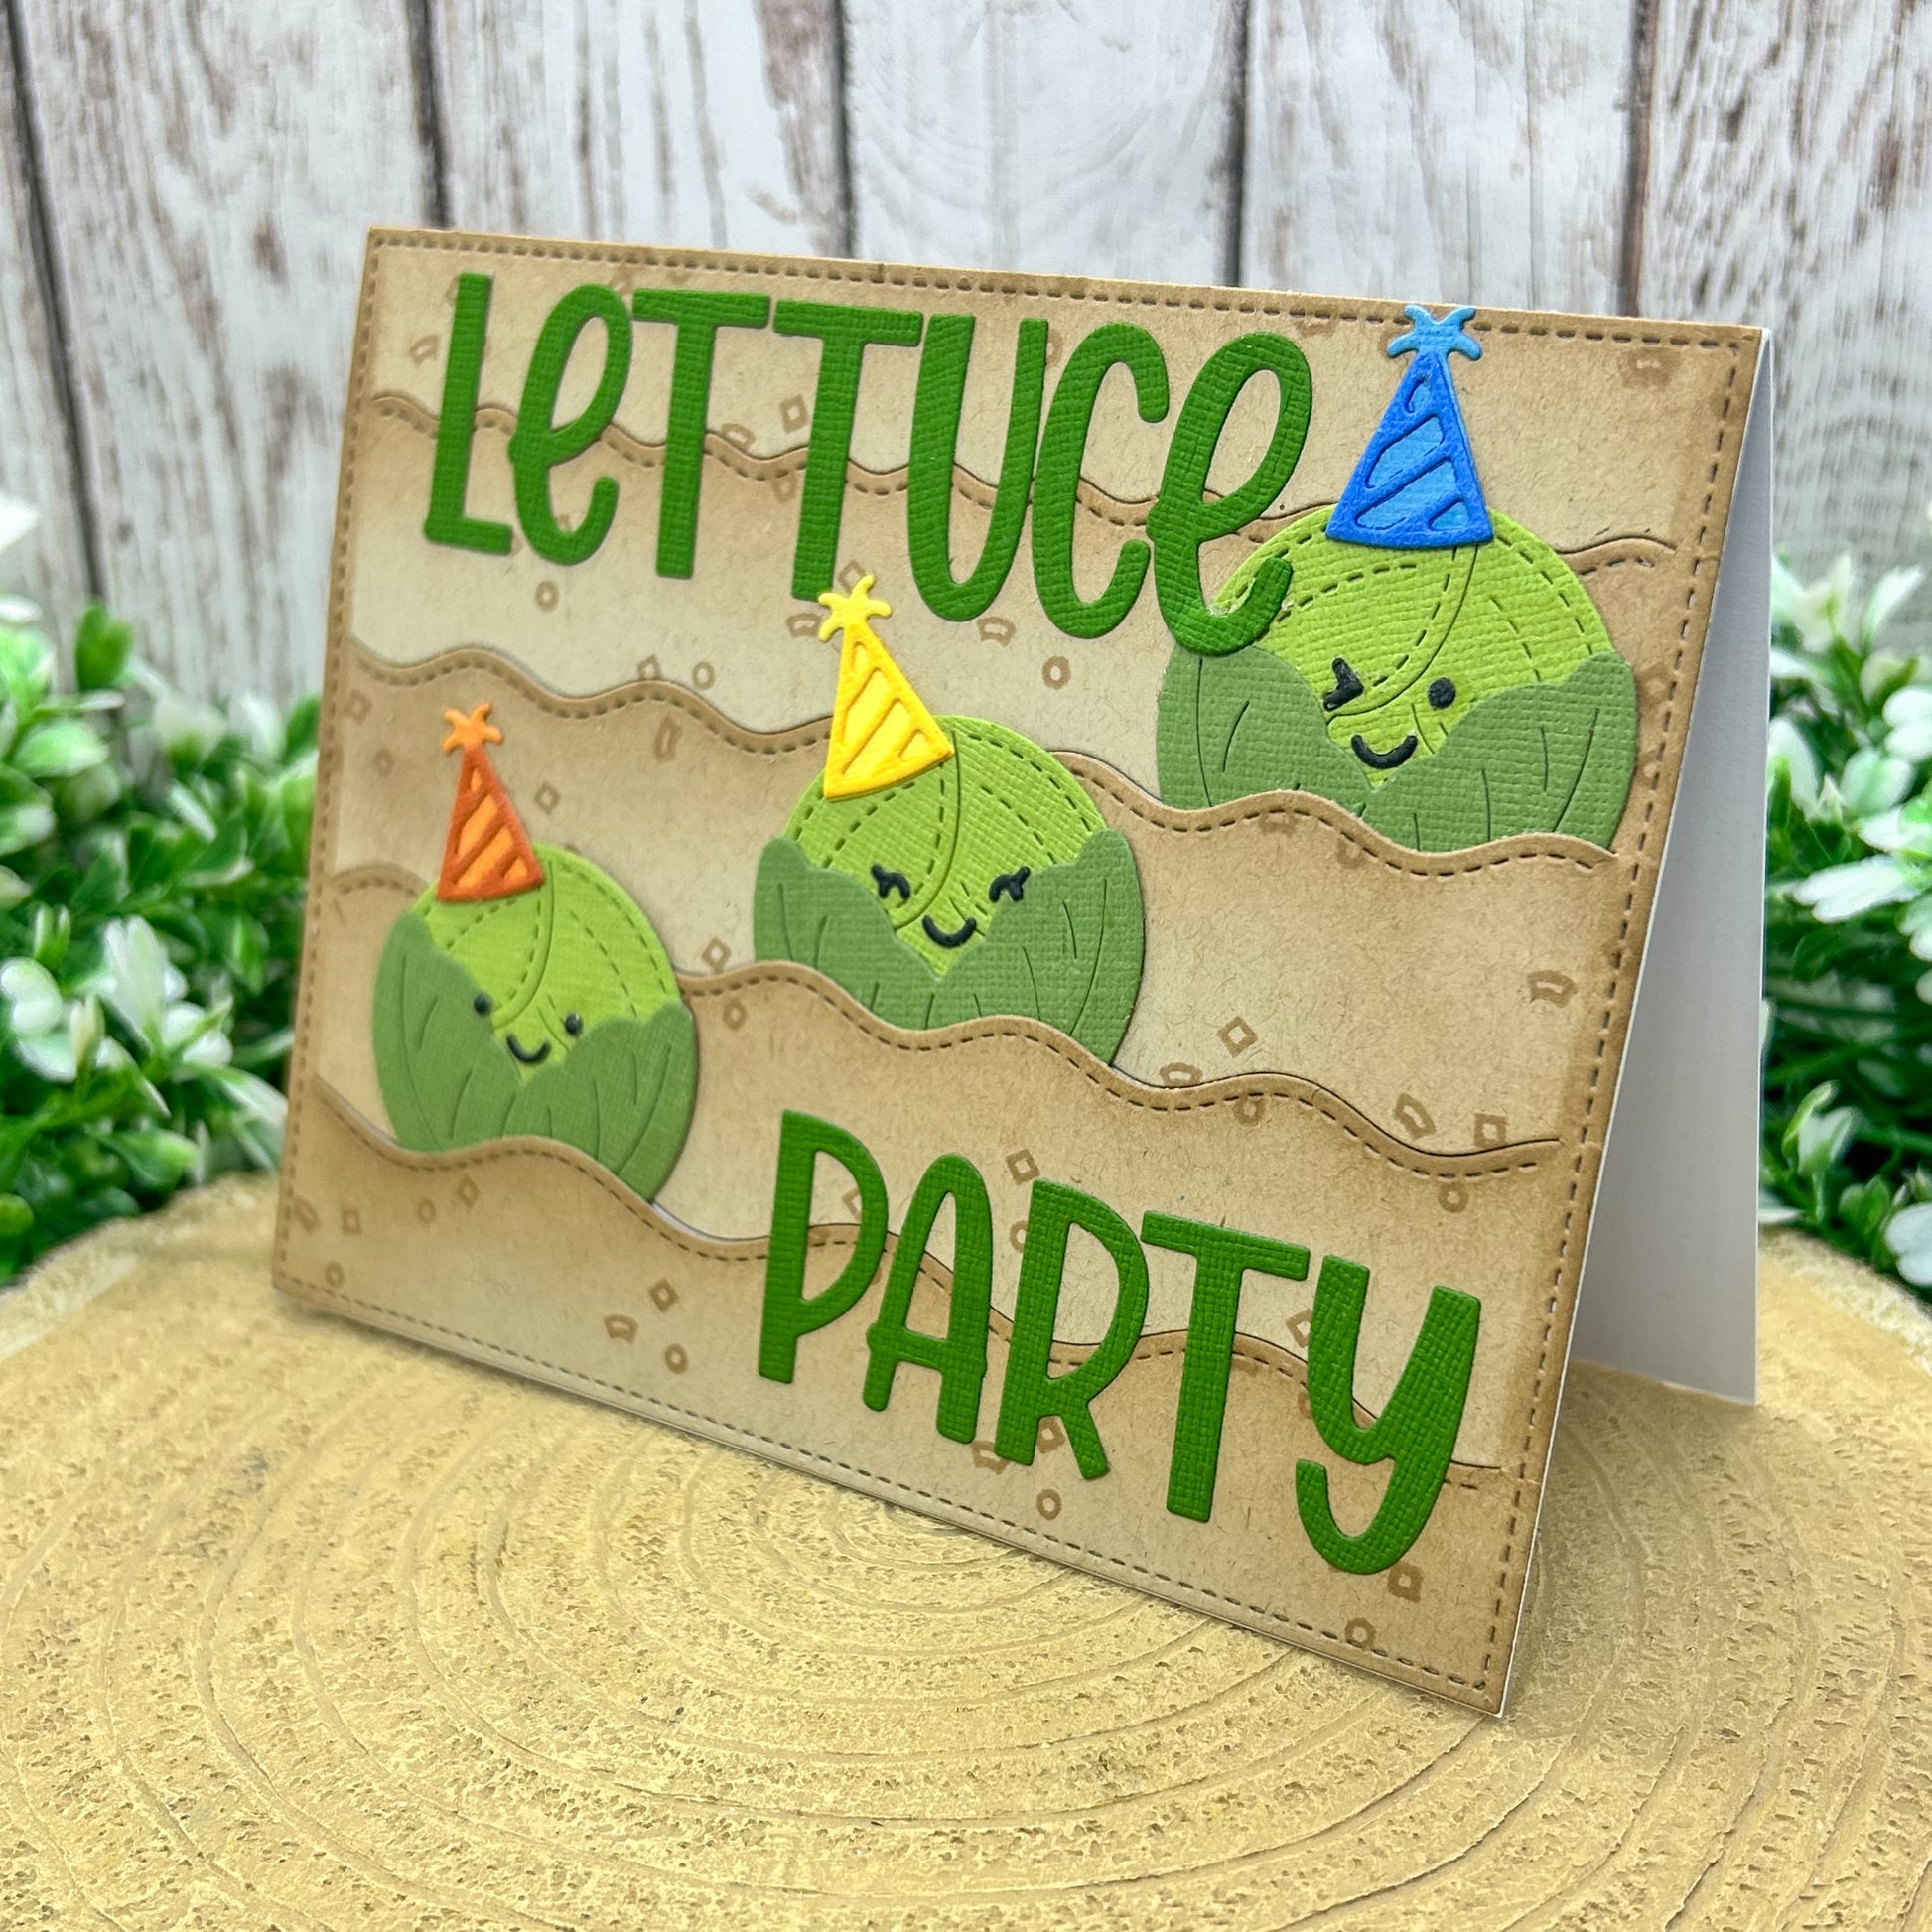 Lettuce Party Funny Handmade Birthday Card-1